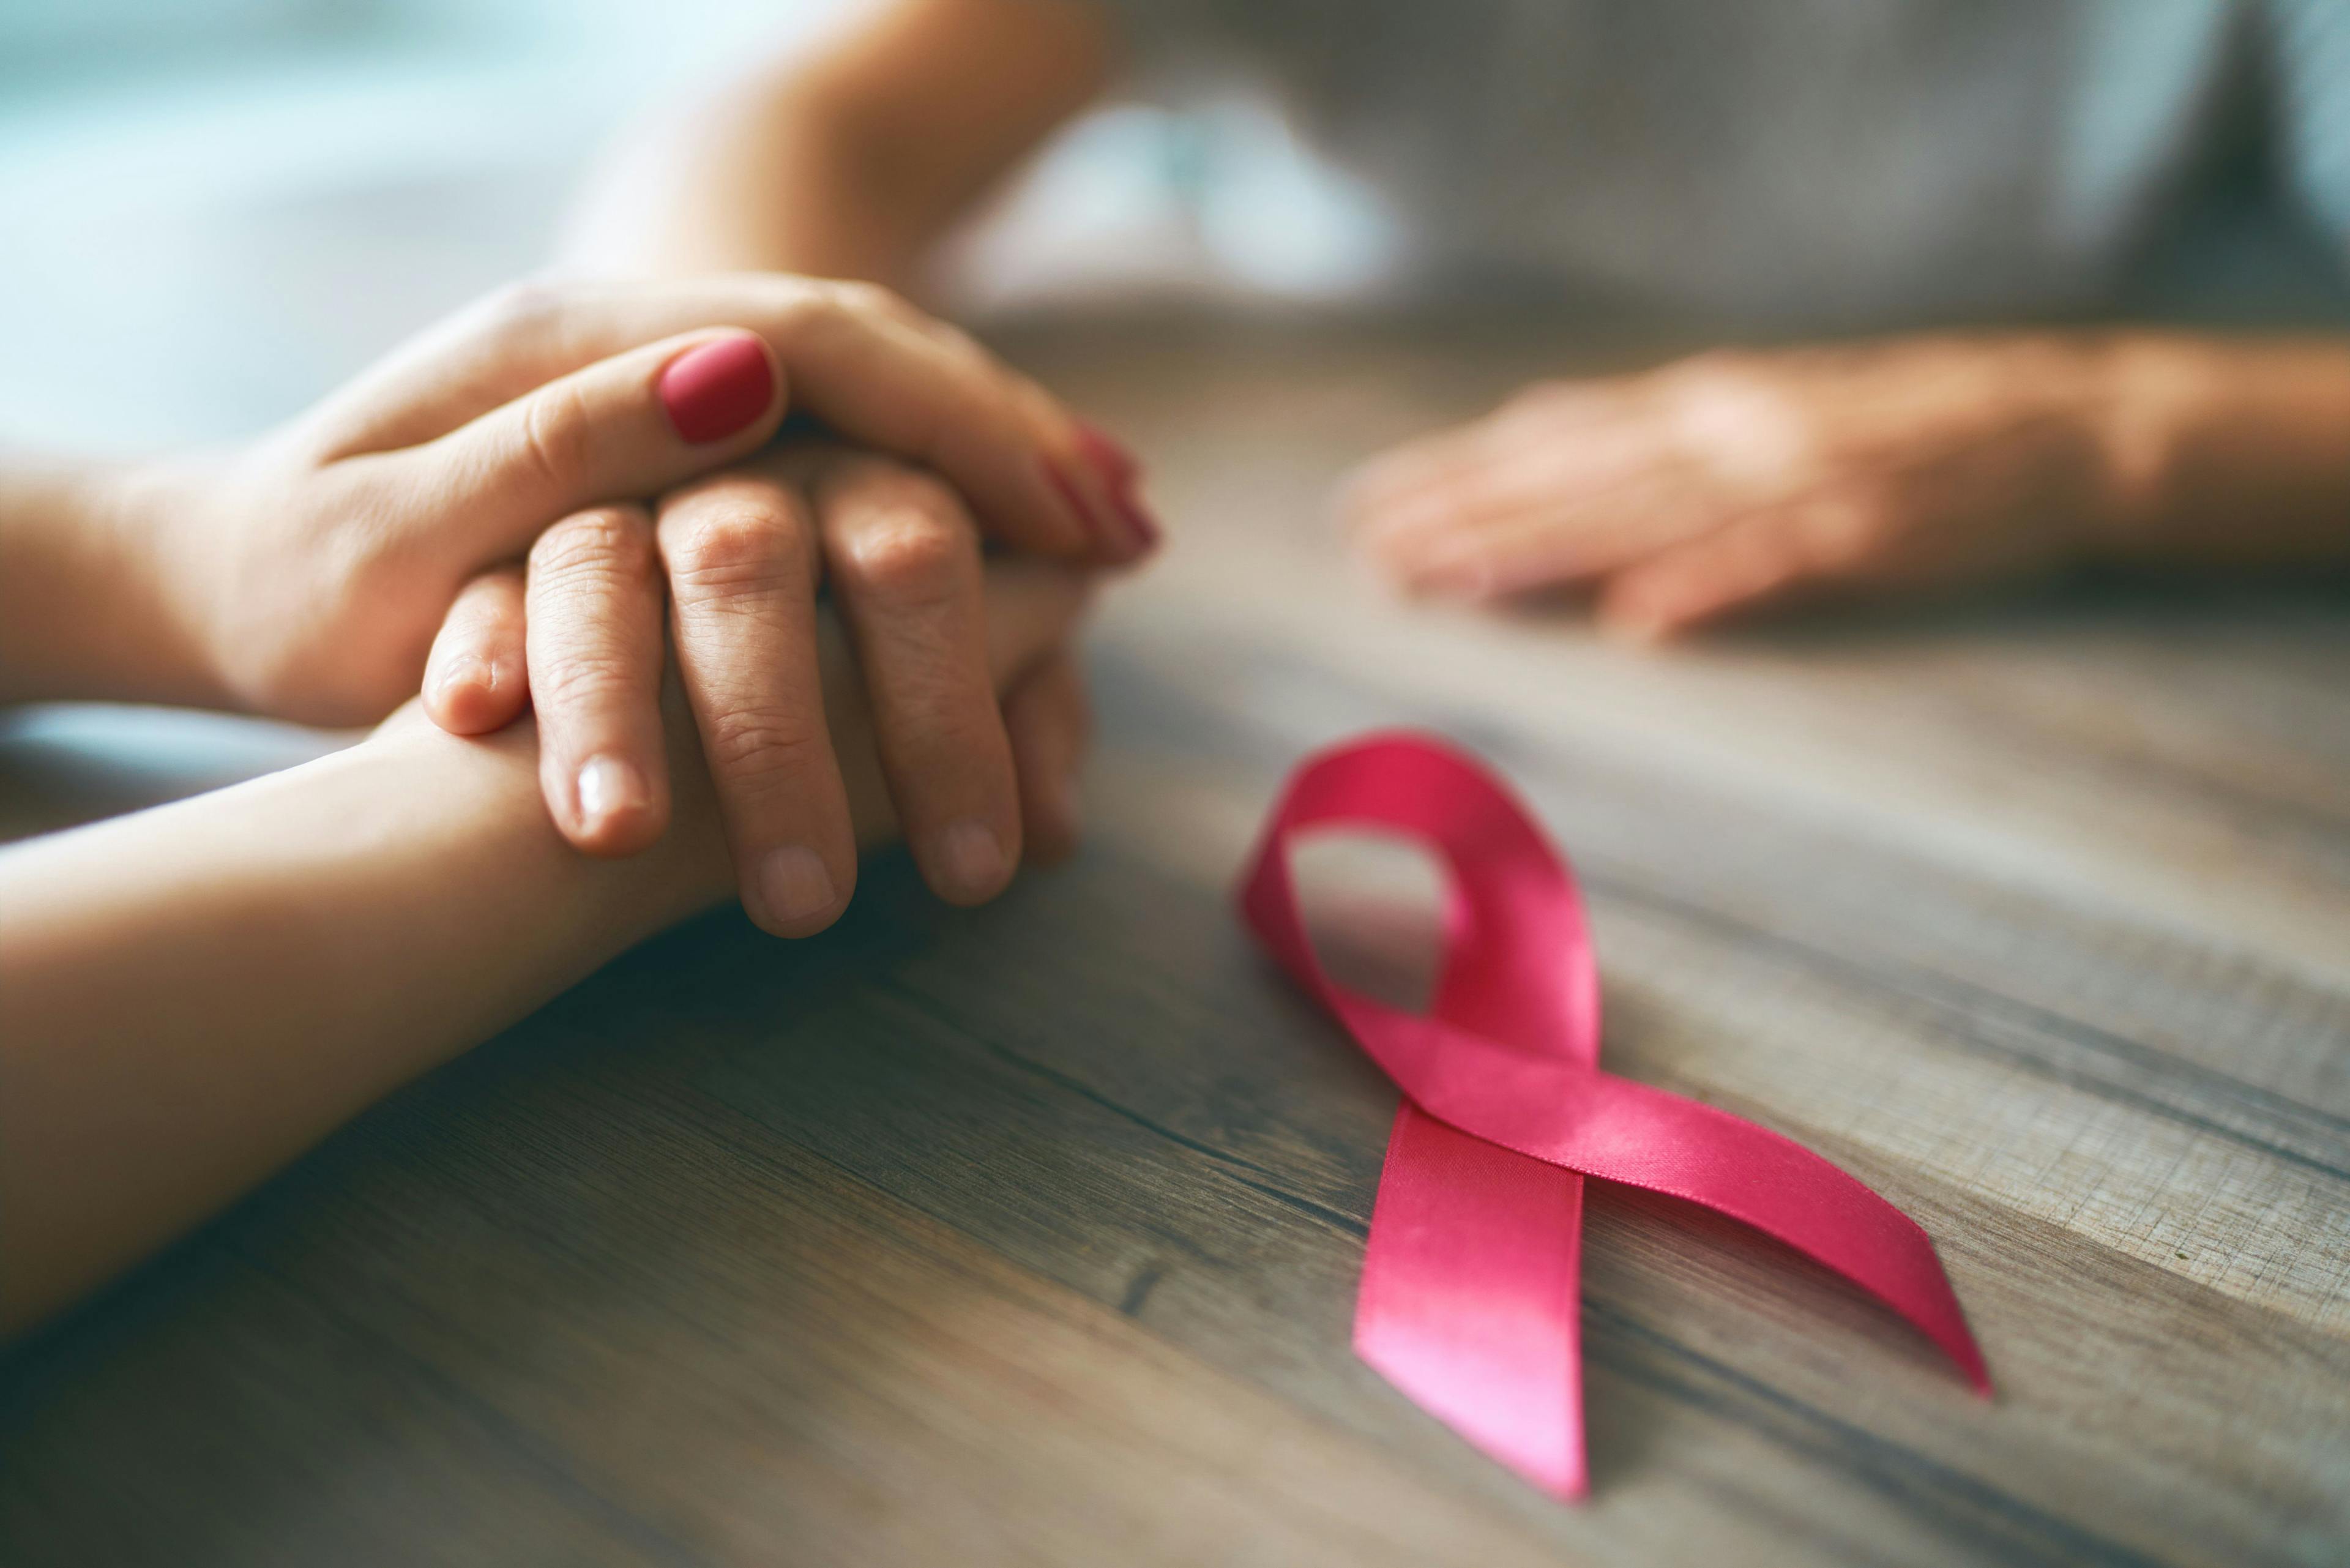 Breast cancer awareness -- Image credit: Konstantin Yuganov | stock.adobe.com